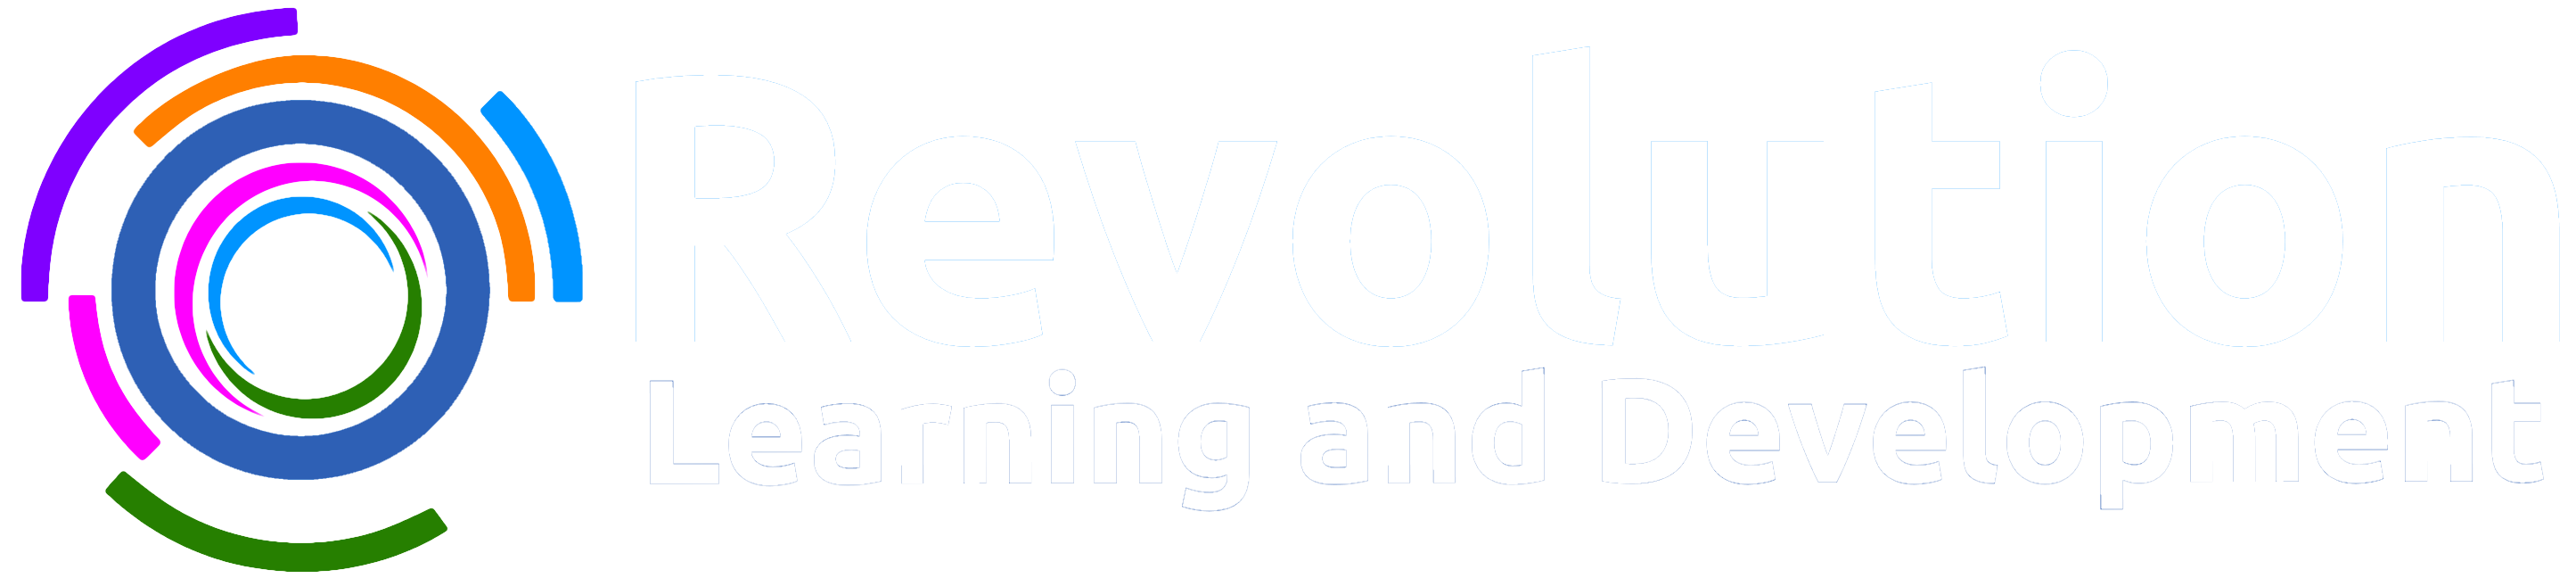 Revolution Learning and Development – Malta